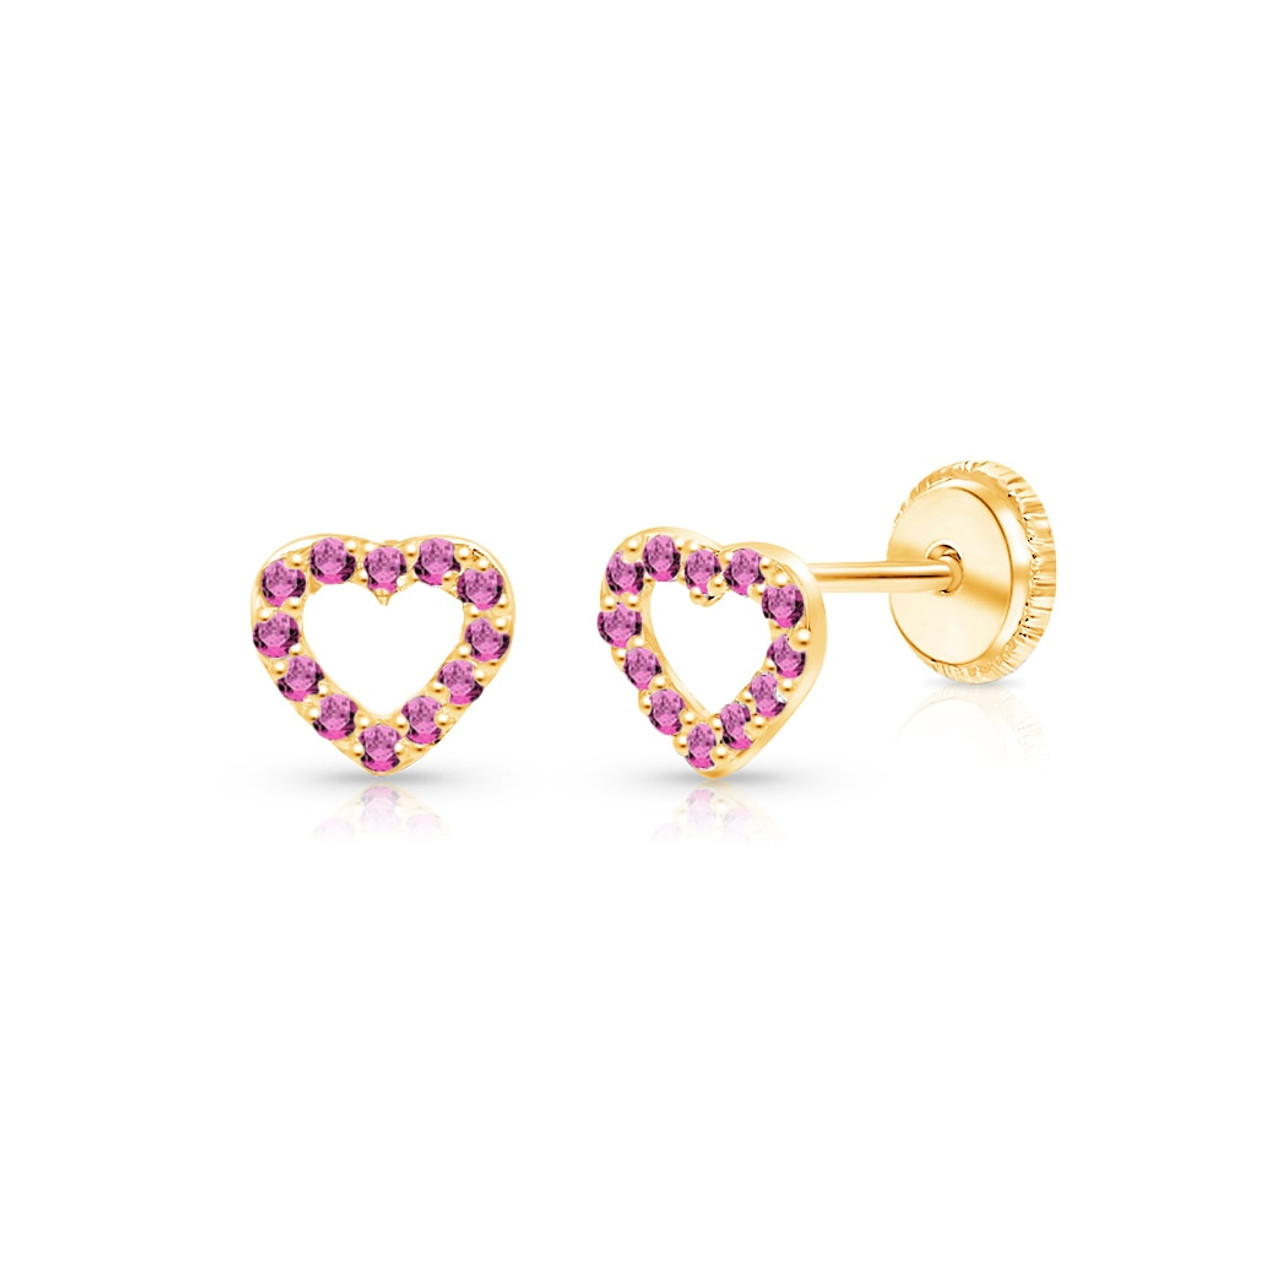 Details about   14k Solid White Gold June Birthstone Alexandarite Heart Stud Earrings 5mm 